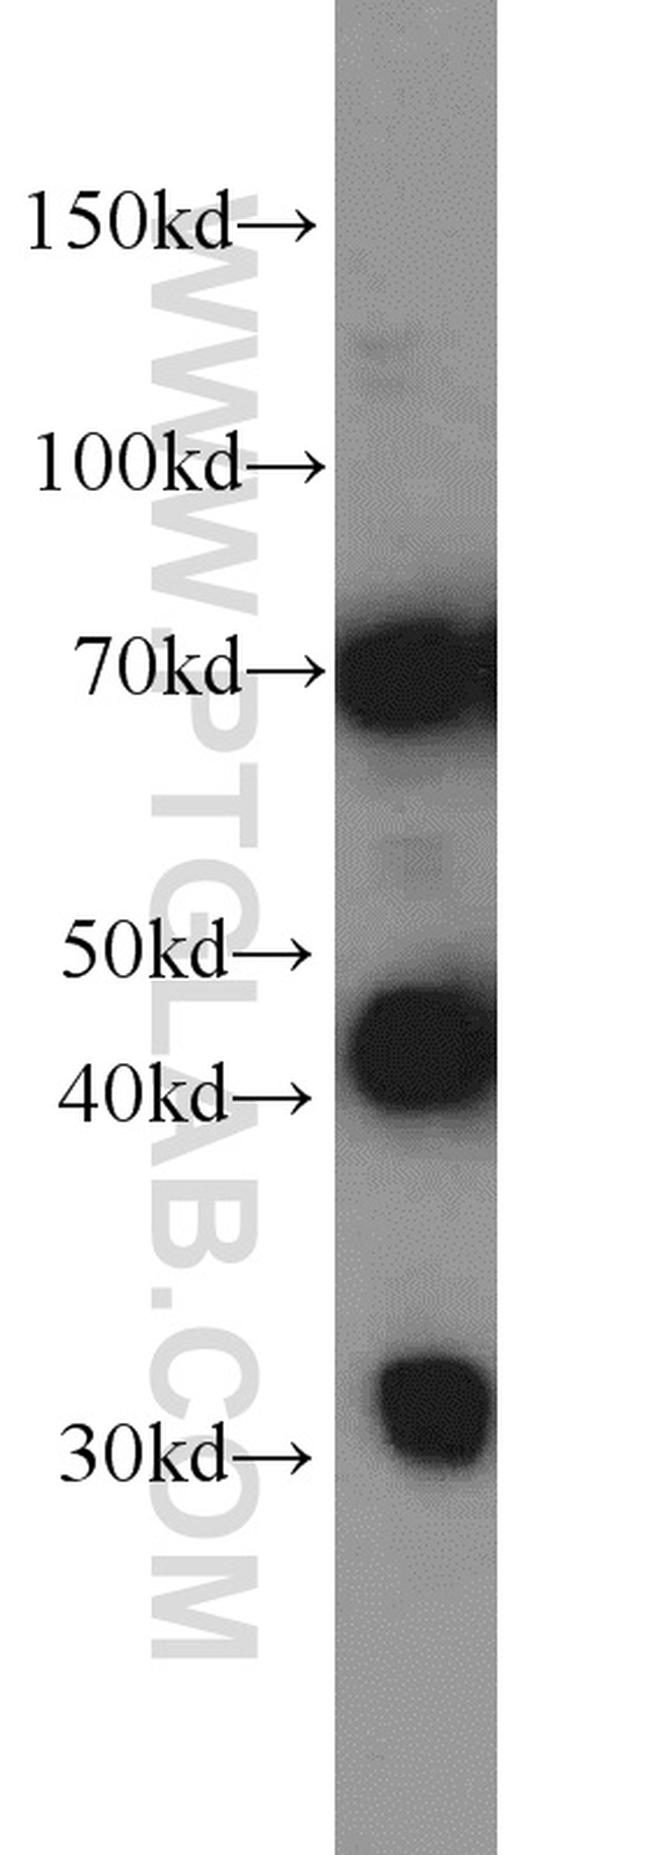 DNAJC2/MPP11 Antibody in Western Blot (WB)